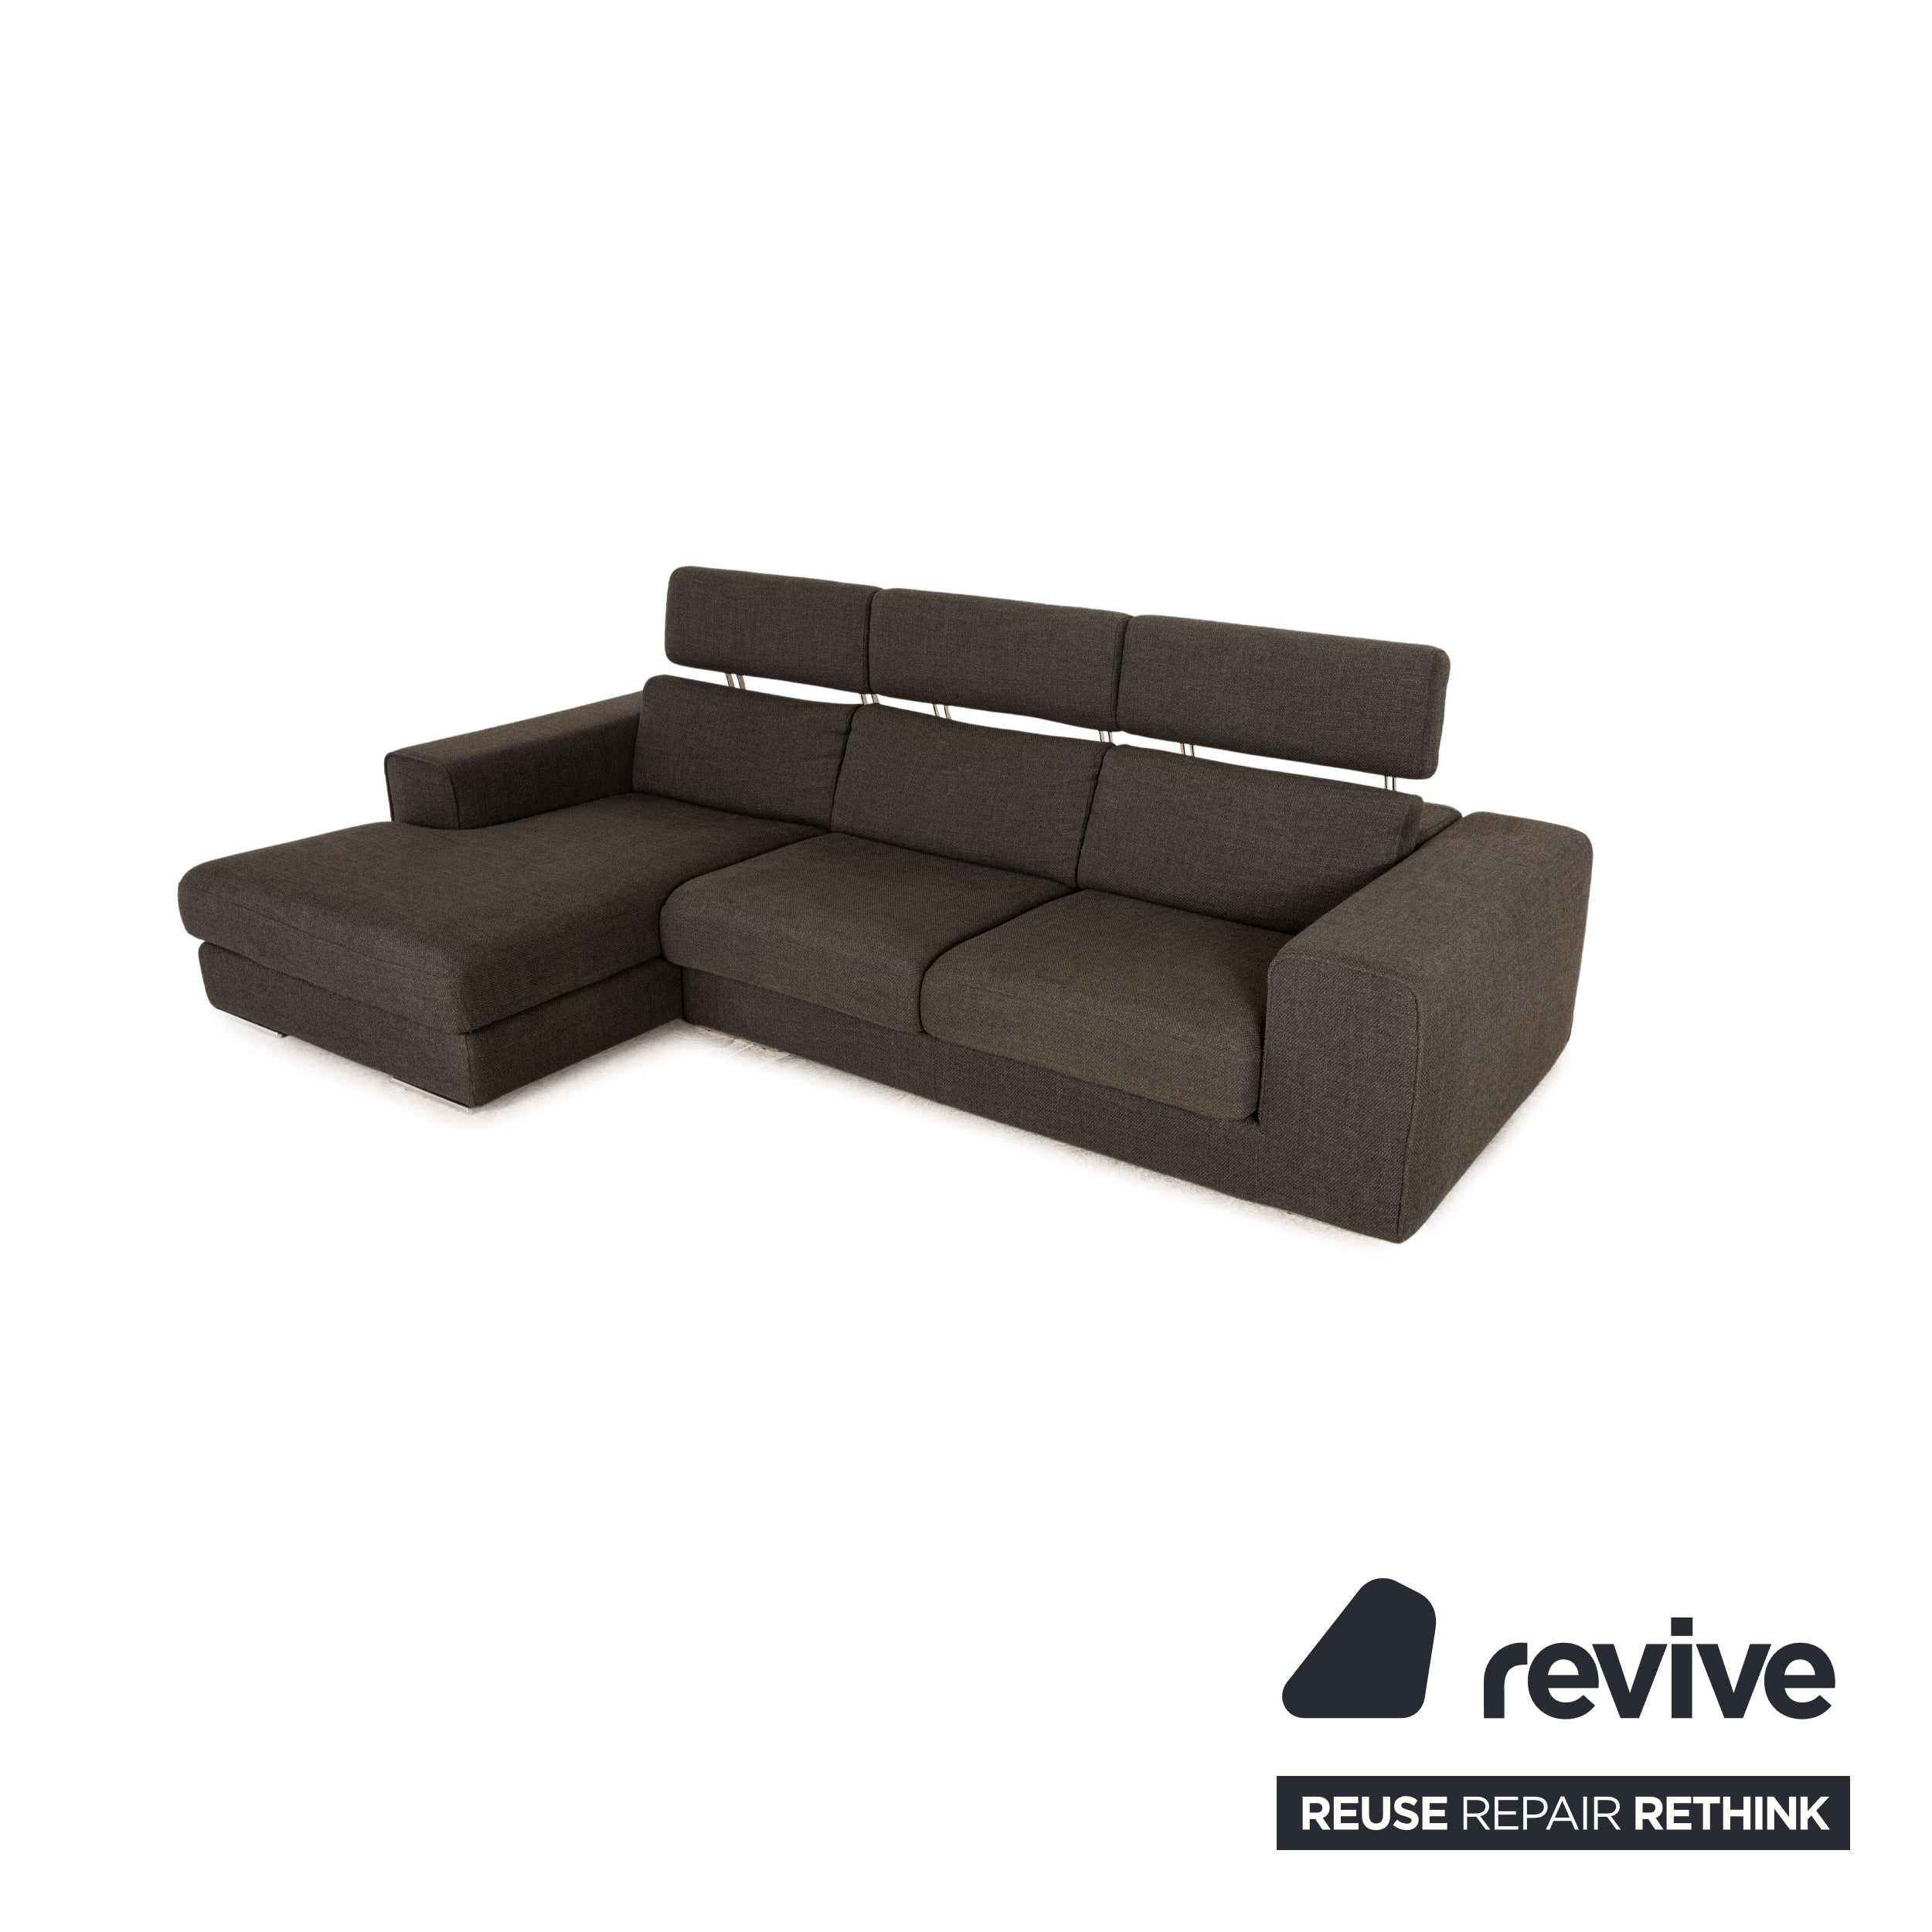 Who's Perfect Avenue Stoff Ecksofa Grau Sofa Couch manuelle Funktion Recamiere links